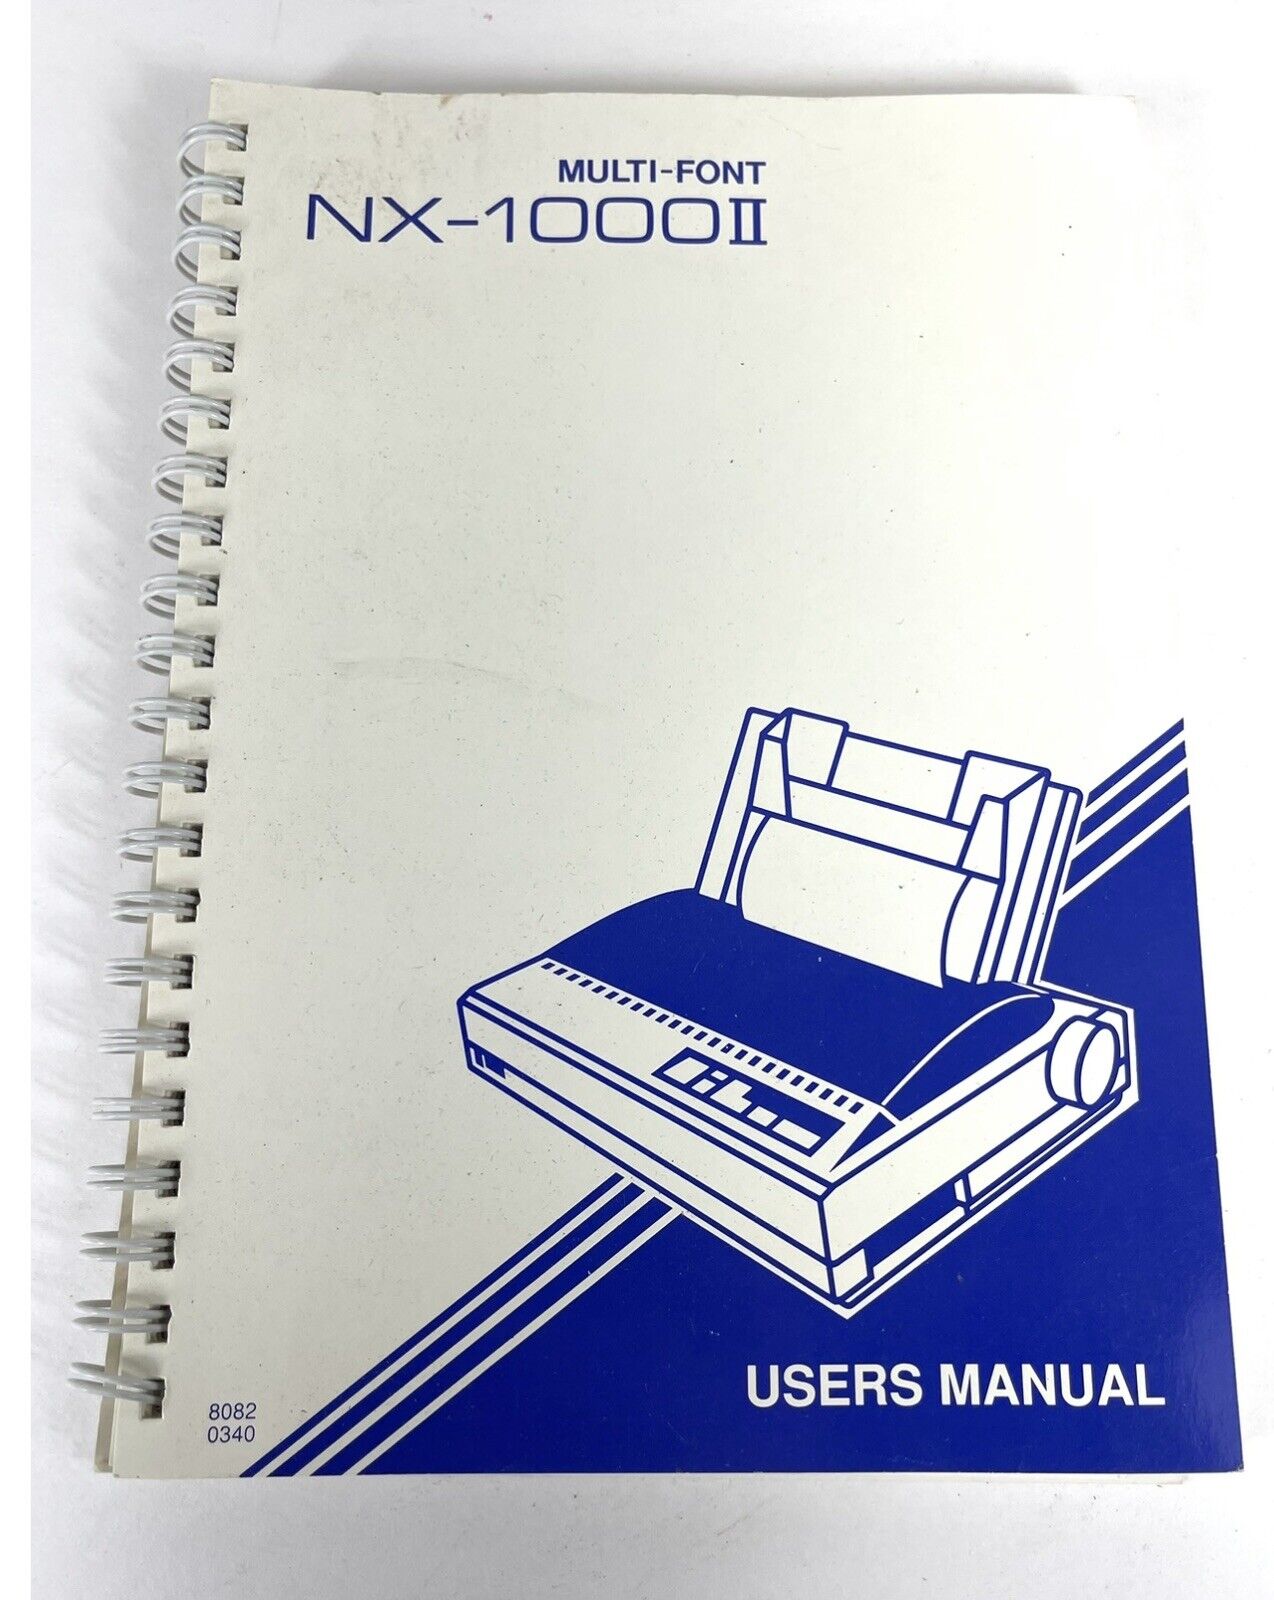 User's Manual Guide - Multi-font NX-1000II Printer Star Micronics 1989